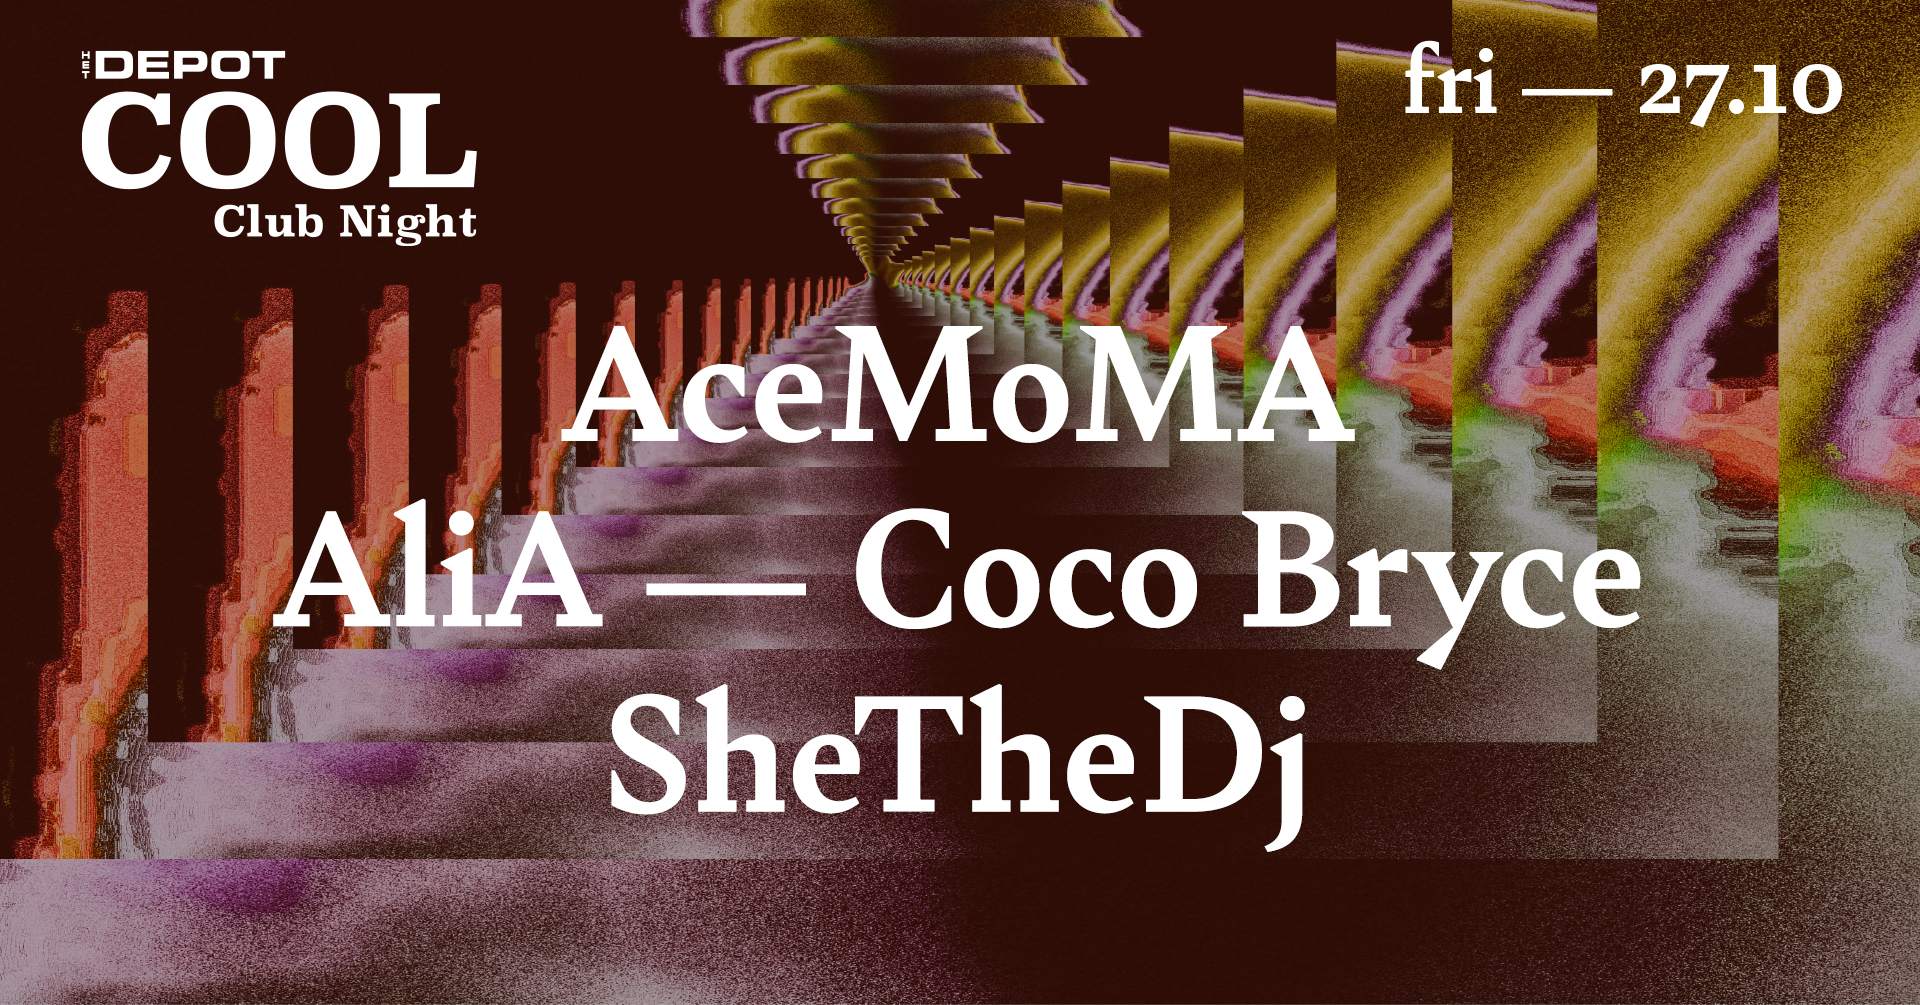 COOL Club Night w/ AceMoMa, Alia, Coco Bryce & SheTheDj / Het Depot - フライヤー表